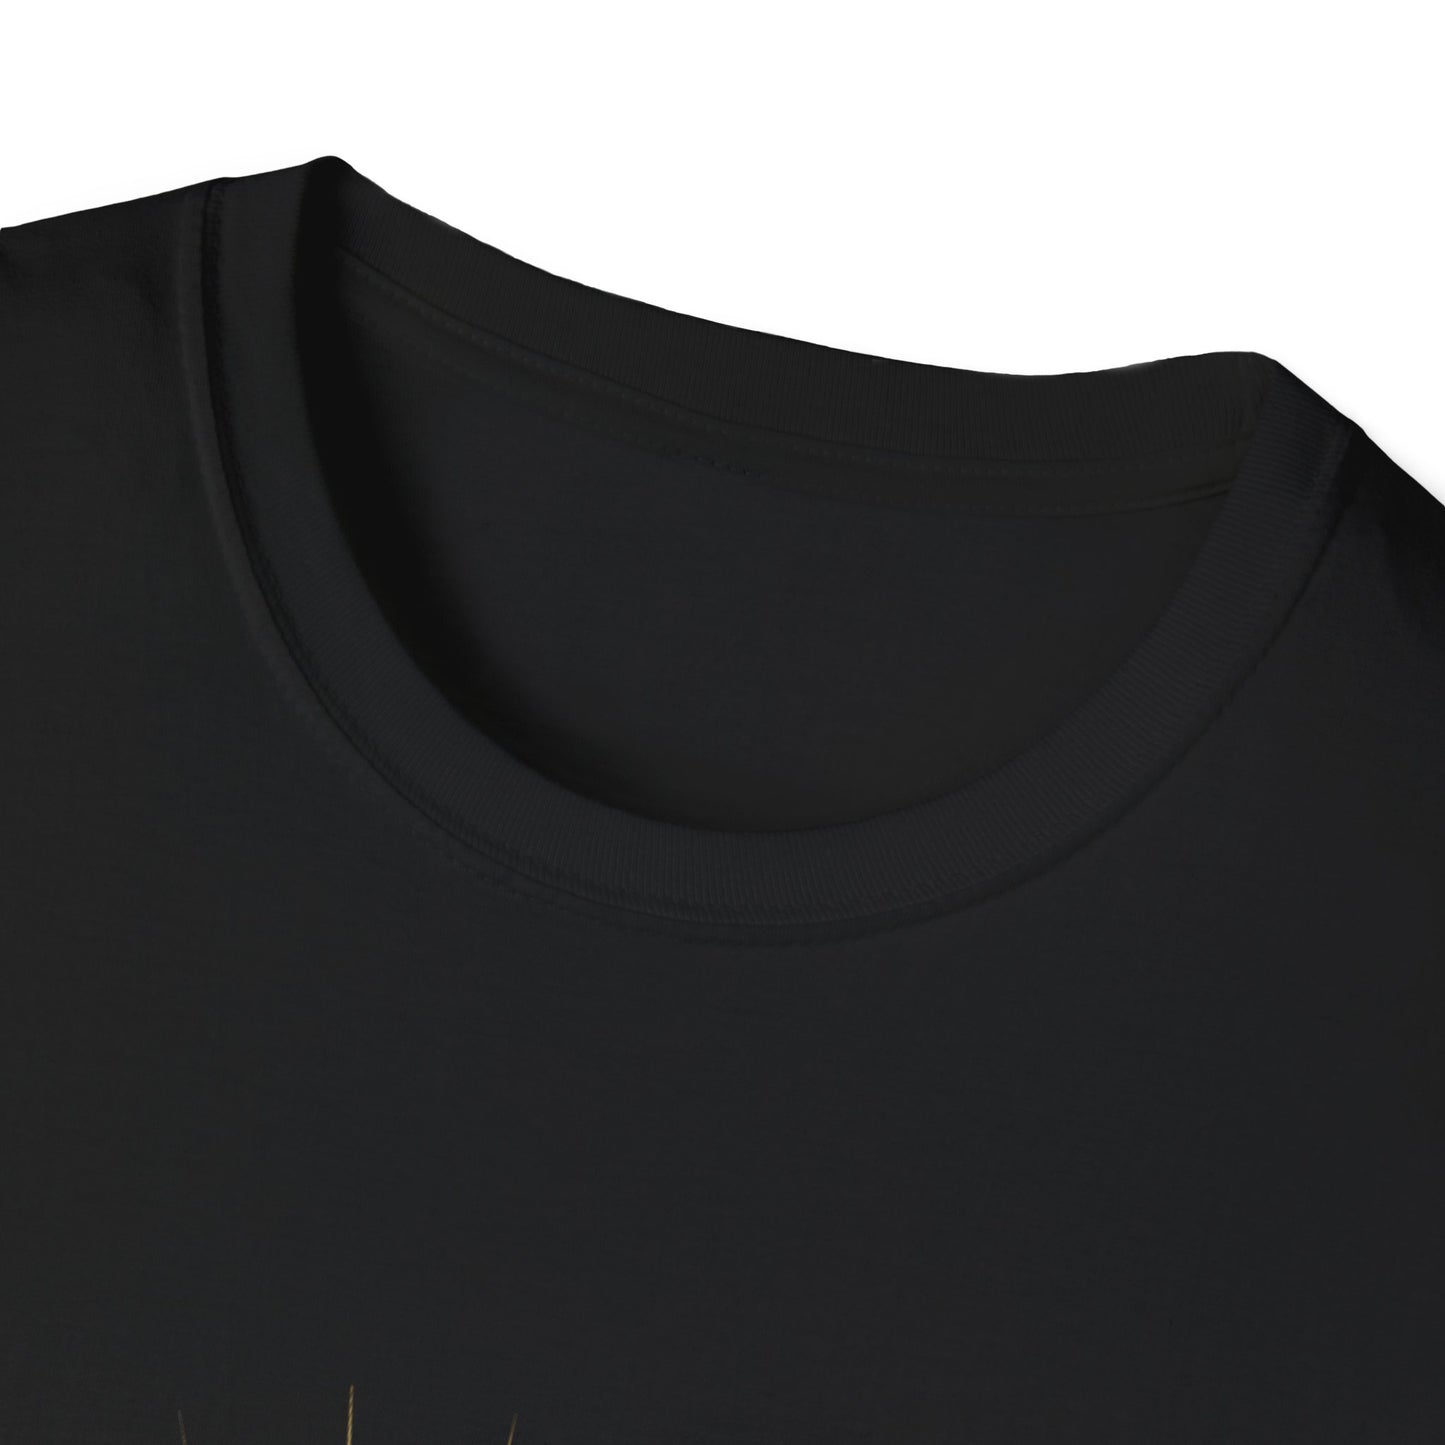 Sunburst Erie Eclipse 2024, Softstyle Tee, Solar Event Unisex T-Shirt, Eclipse Shirt